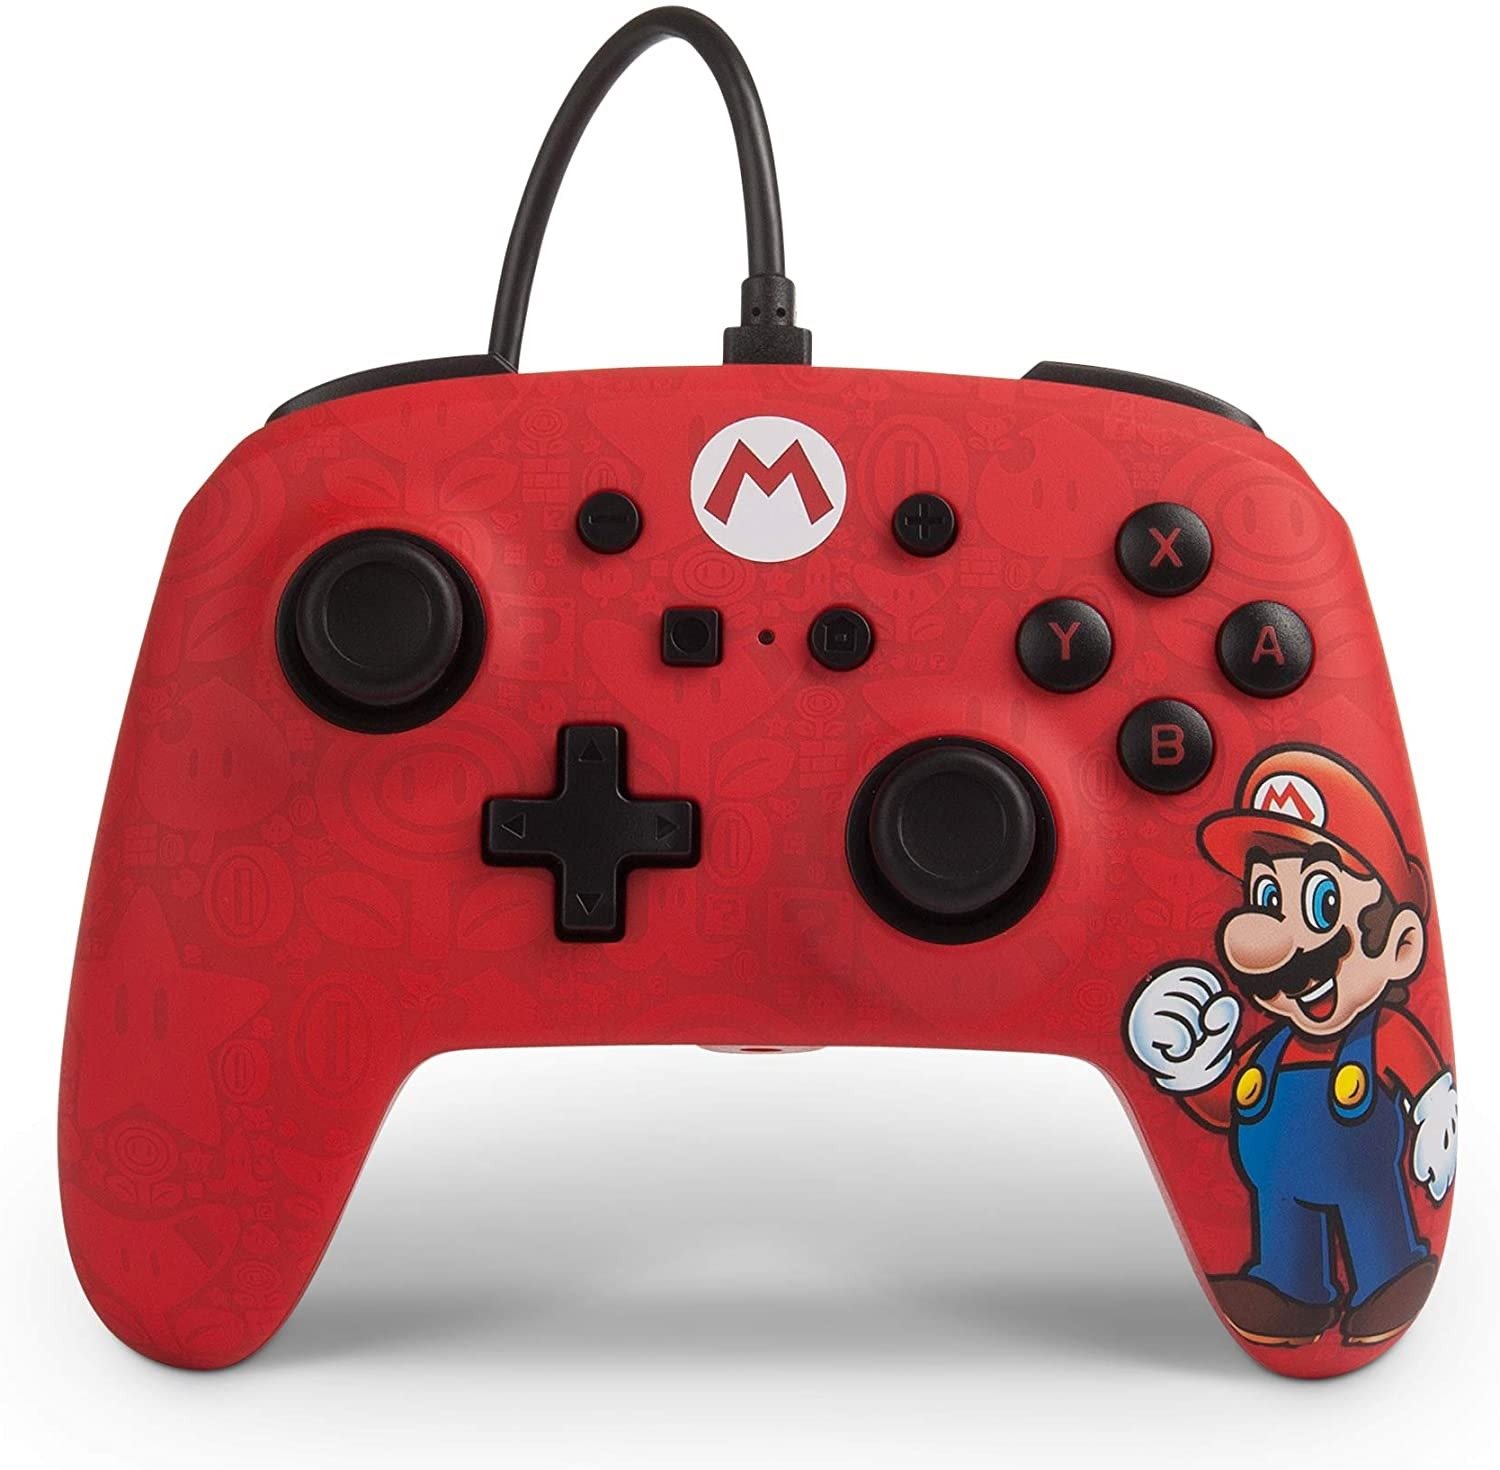 Kontroller PowerA Enhanced Wired Controller - Iconic Mario - Nintendo Switch